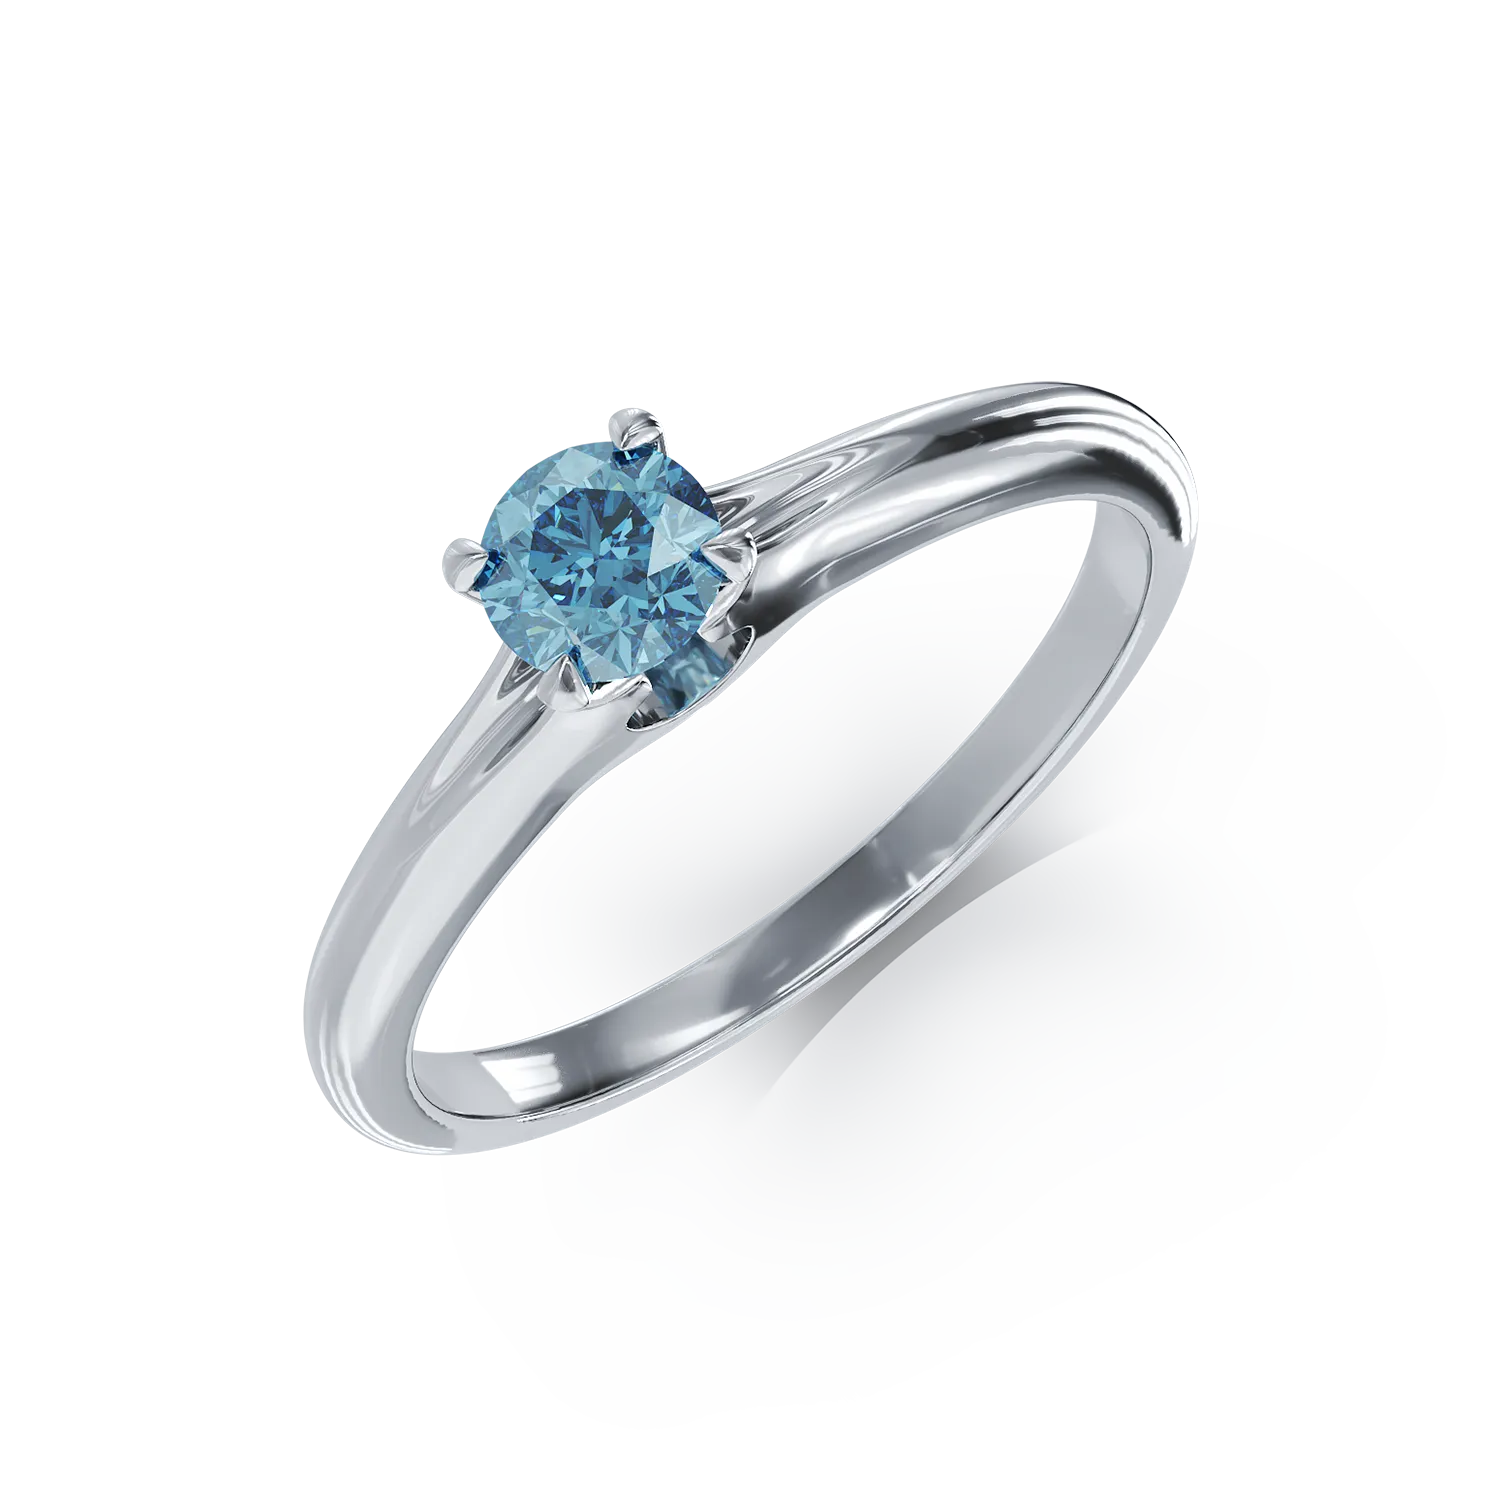 Inel de logodna din aur alb de 18K cu un diamant solitaire albastru de 0.22ct